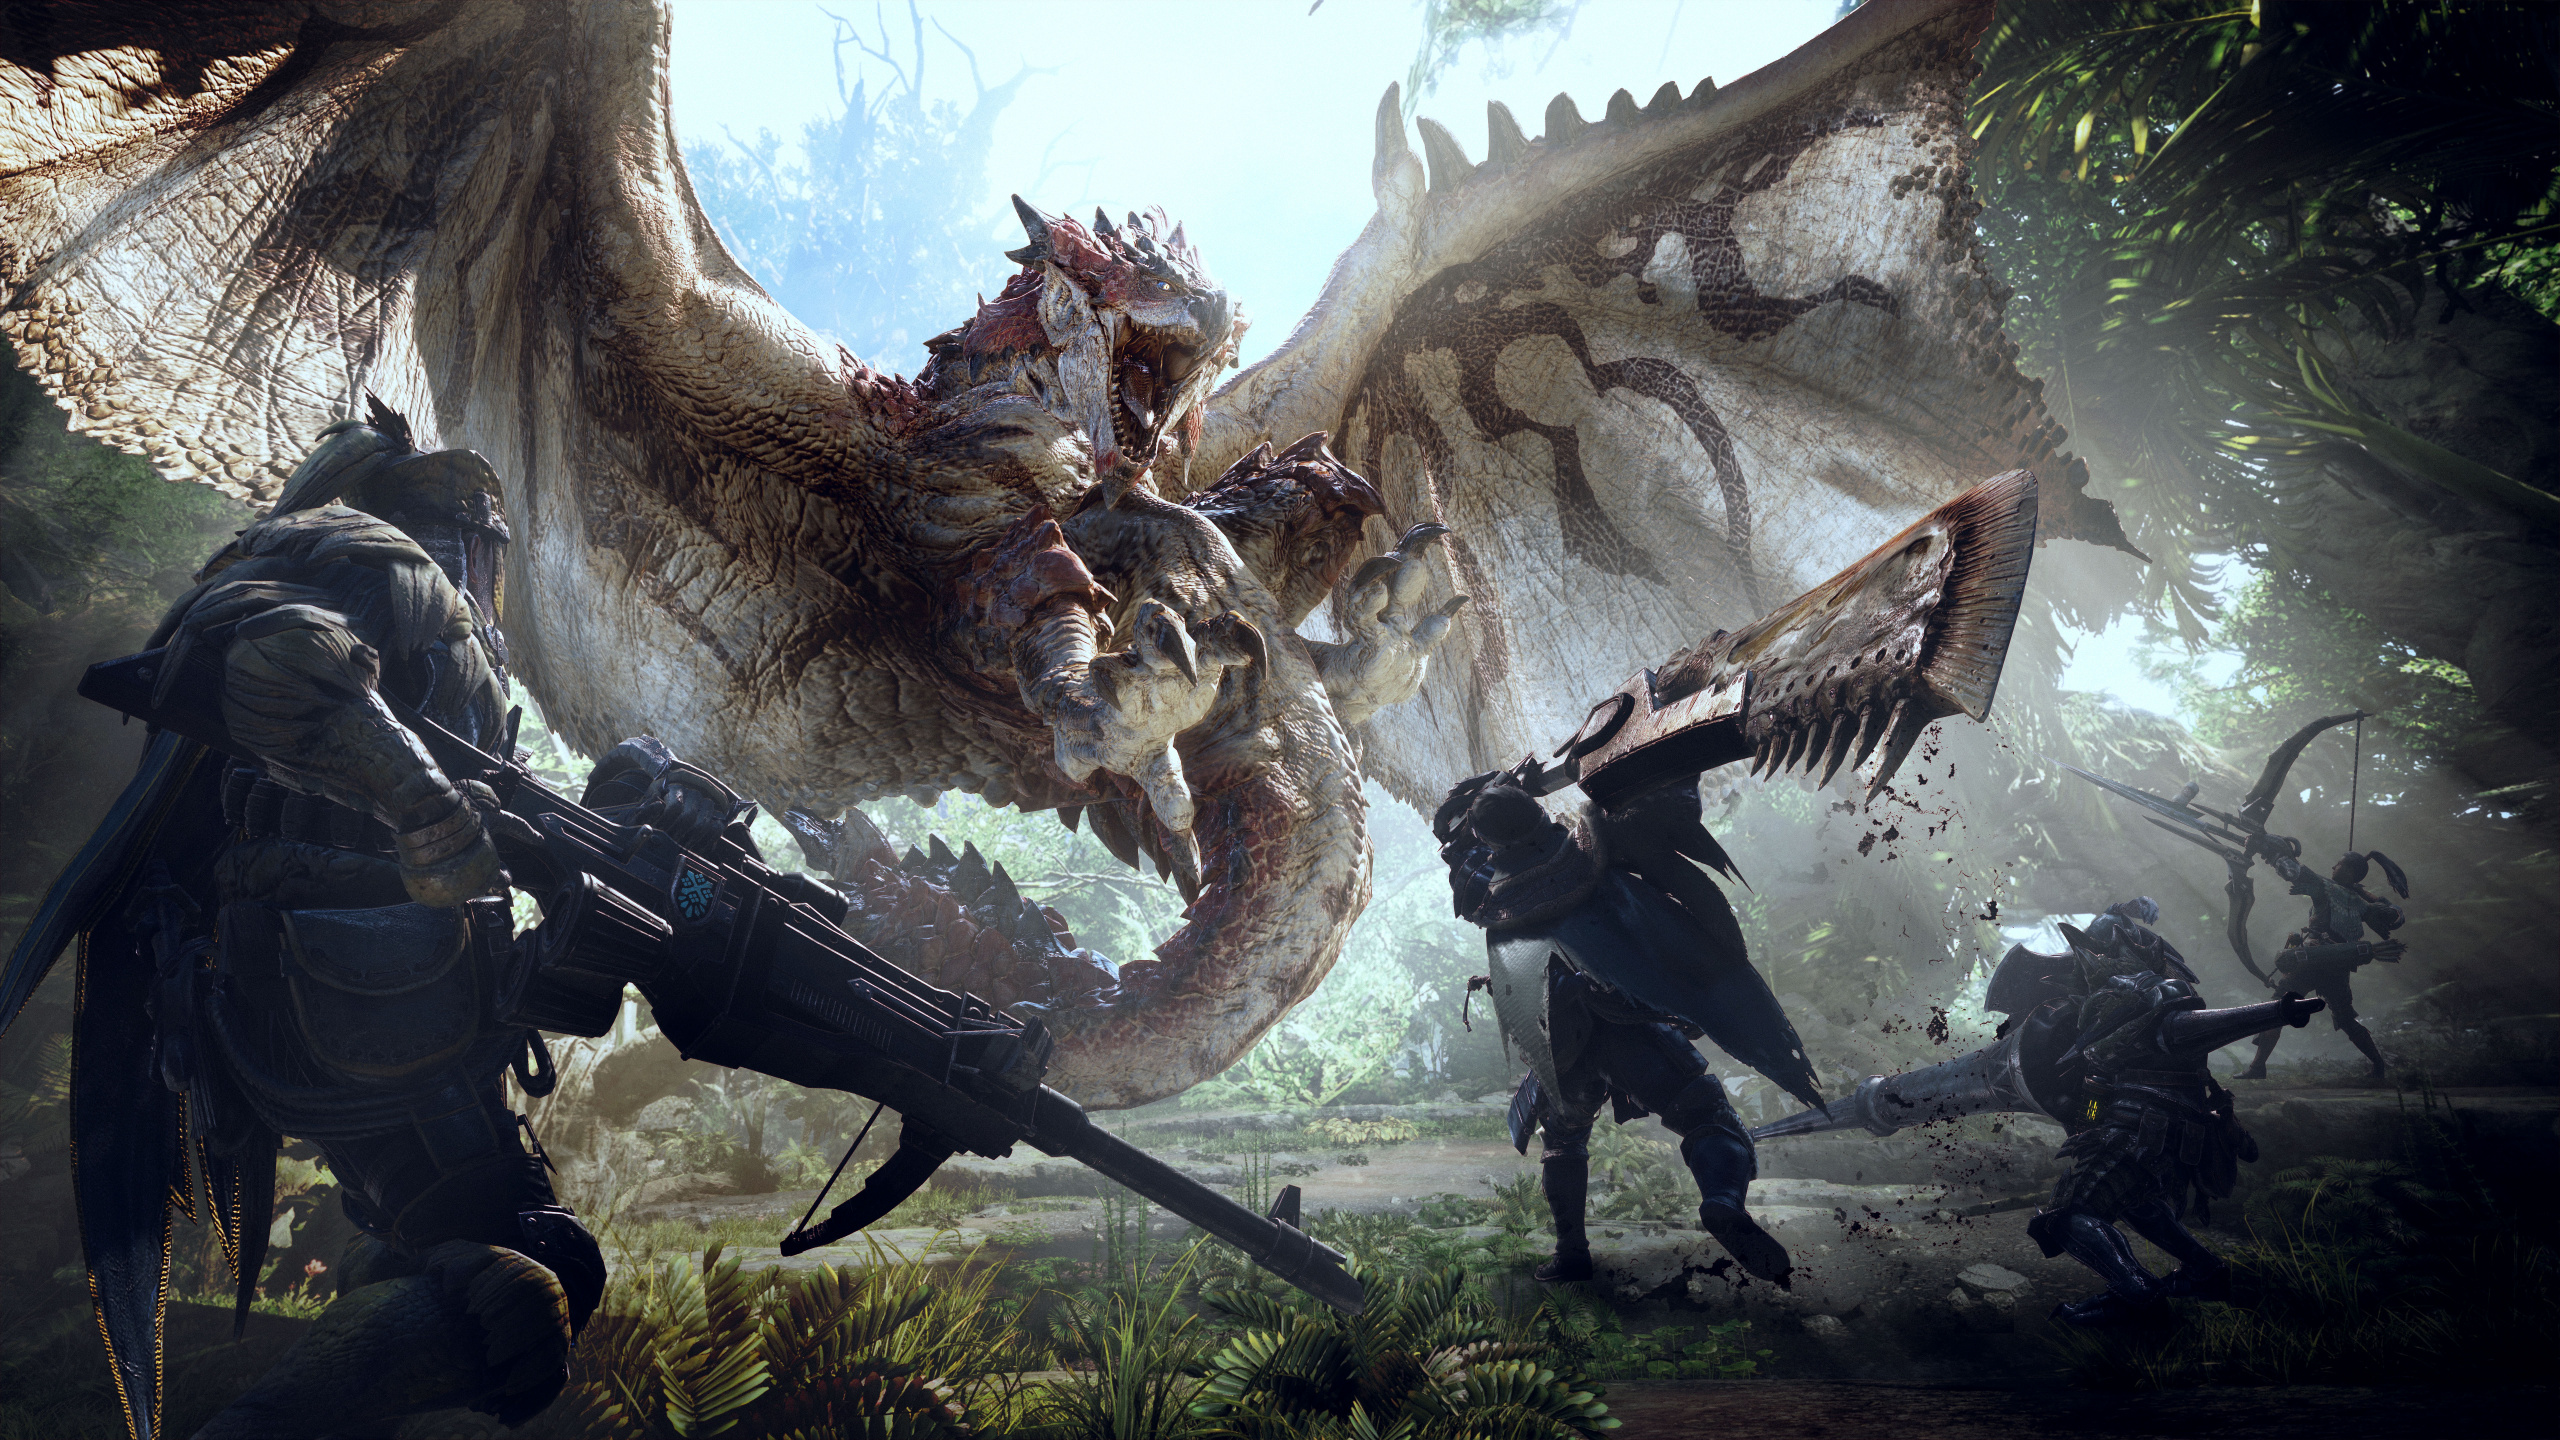 Dragon, Adventure Game, pc Game, Mythology, Illustration. Wallpaper in 2560x1440 Resolution